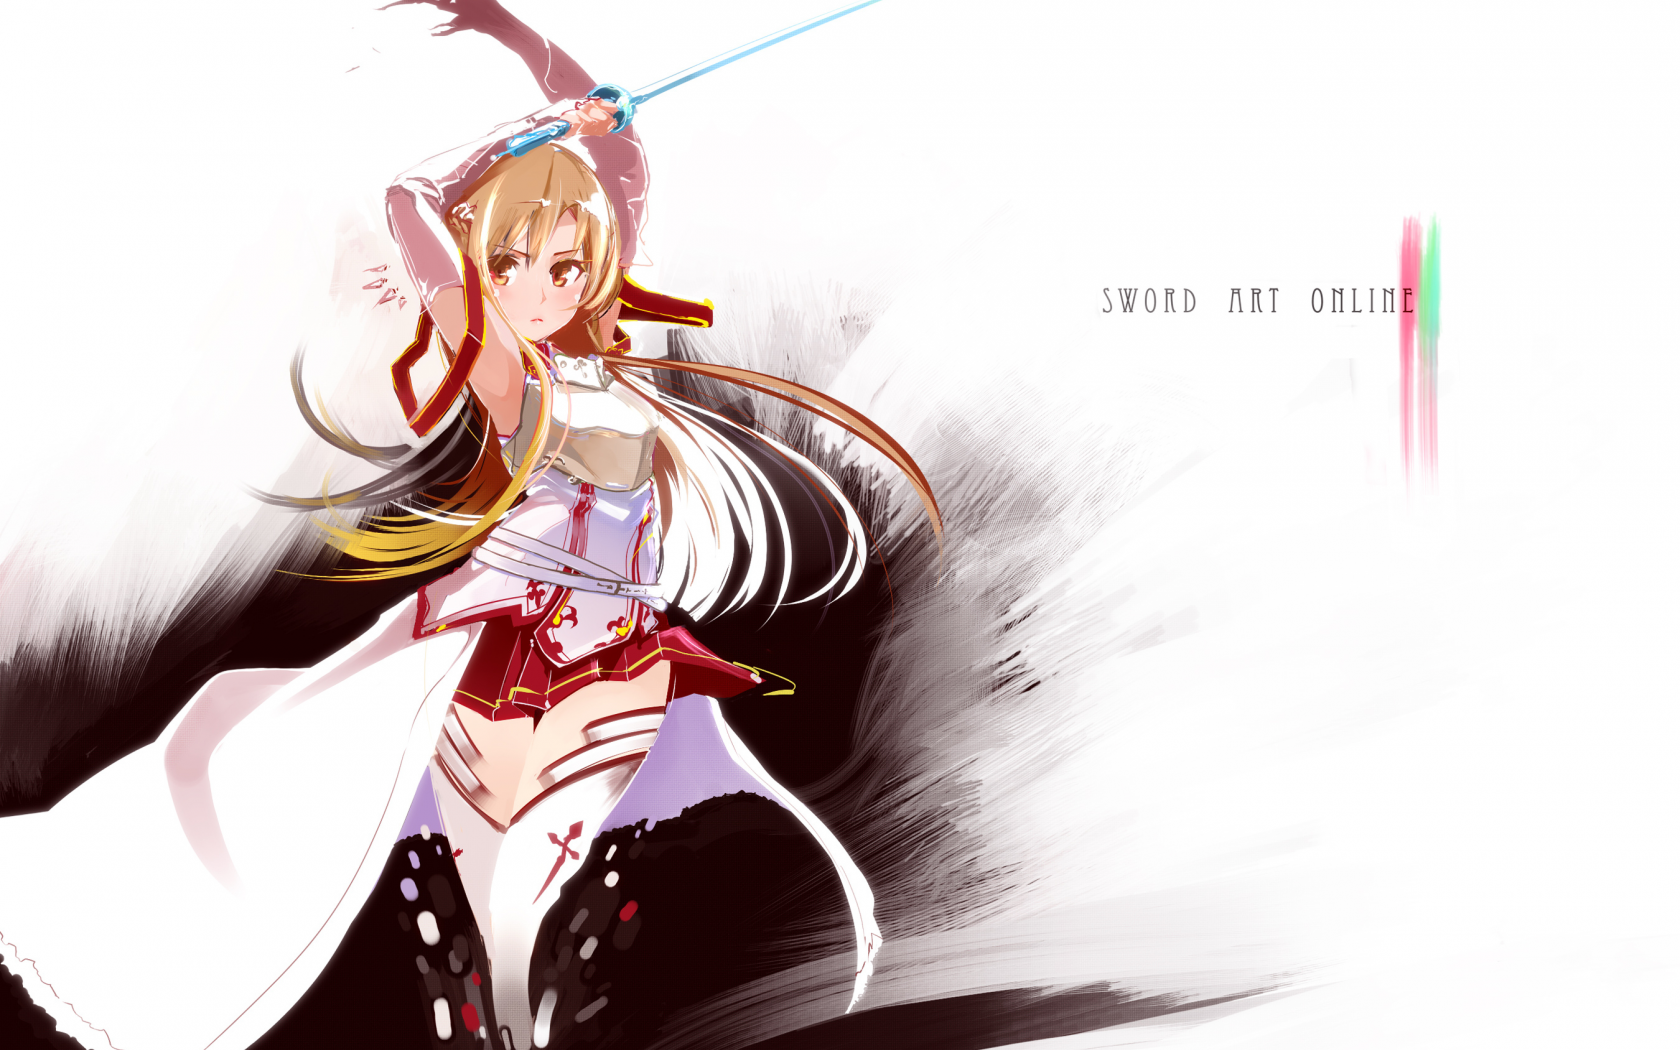 мечница, art, мечь, artist - pmpmpm, sword art online, девушка, asuna yuuki